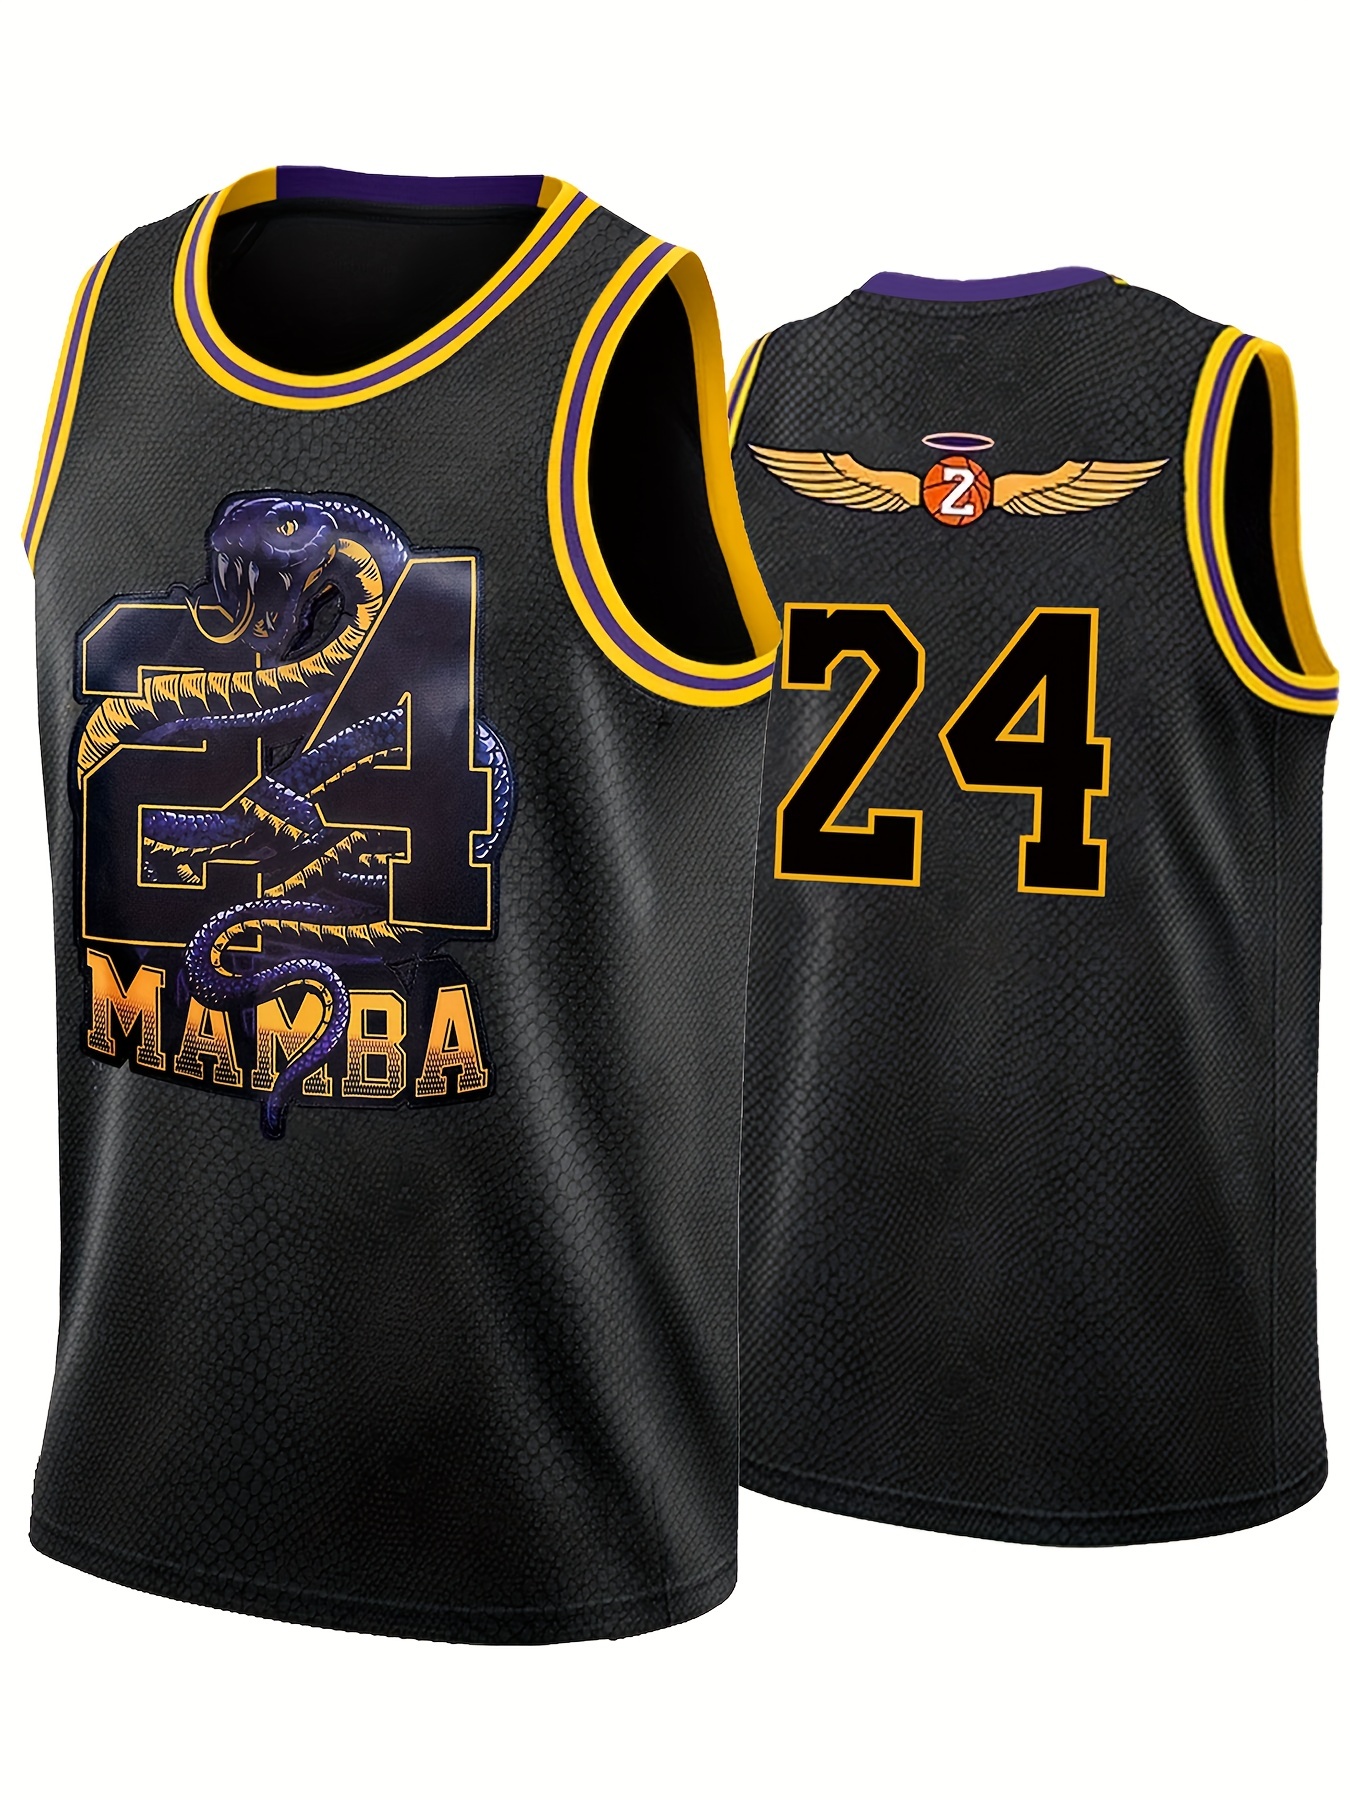 Kids Black Mamba Basketball Jersey Legend Player Number 24#, Toddler Baby  Boy Jersey Tank Top Summer Clothes 